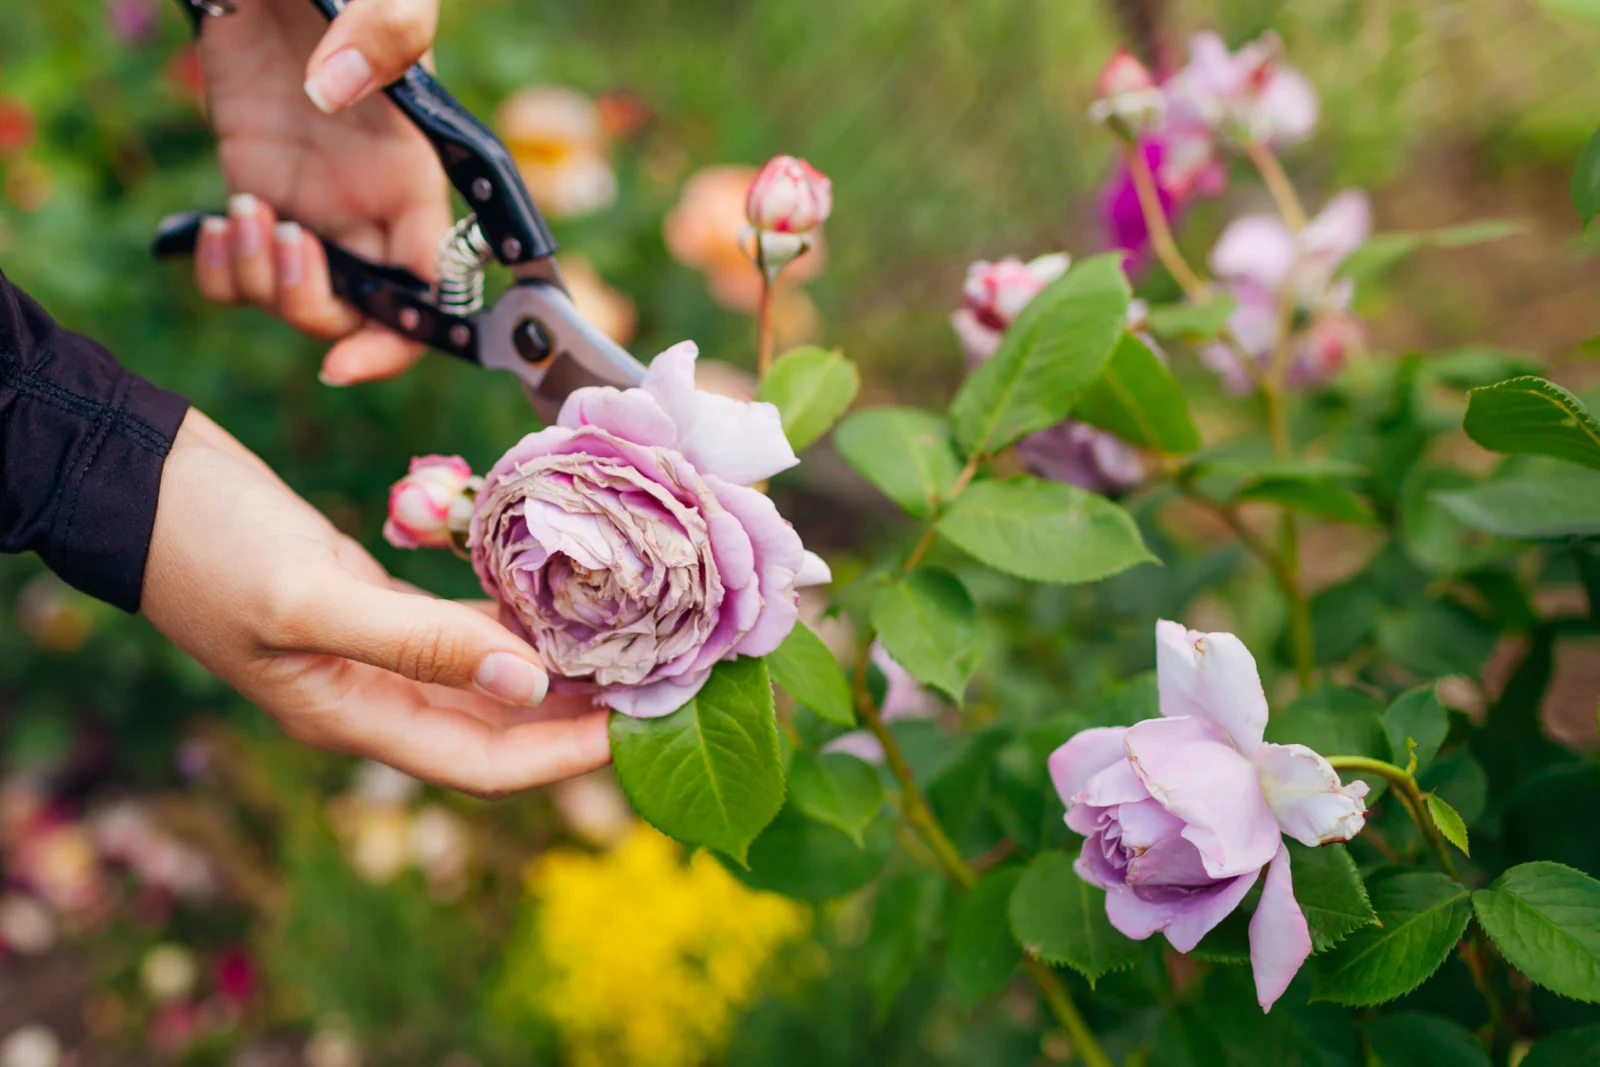 Woman deadheading rose with rain damage in summer garden